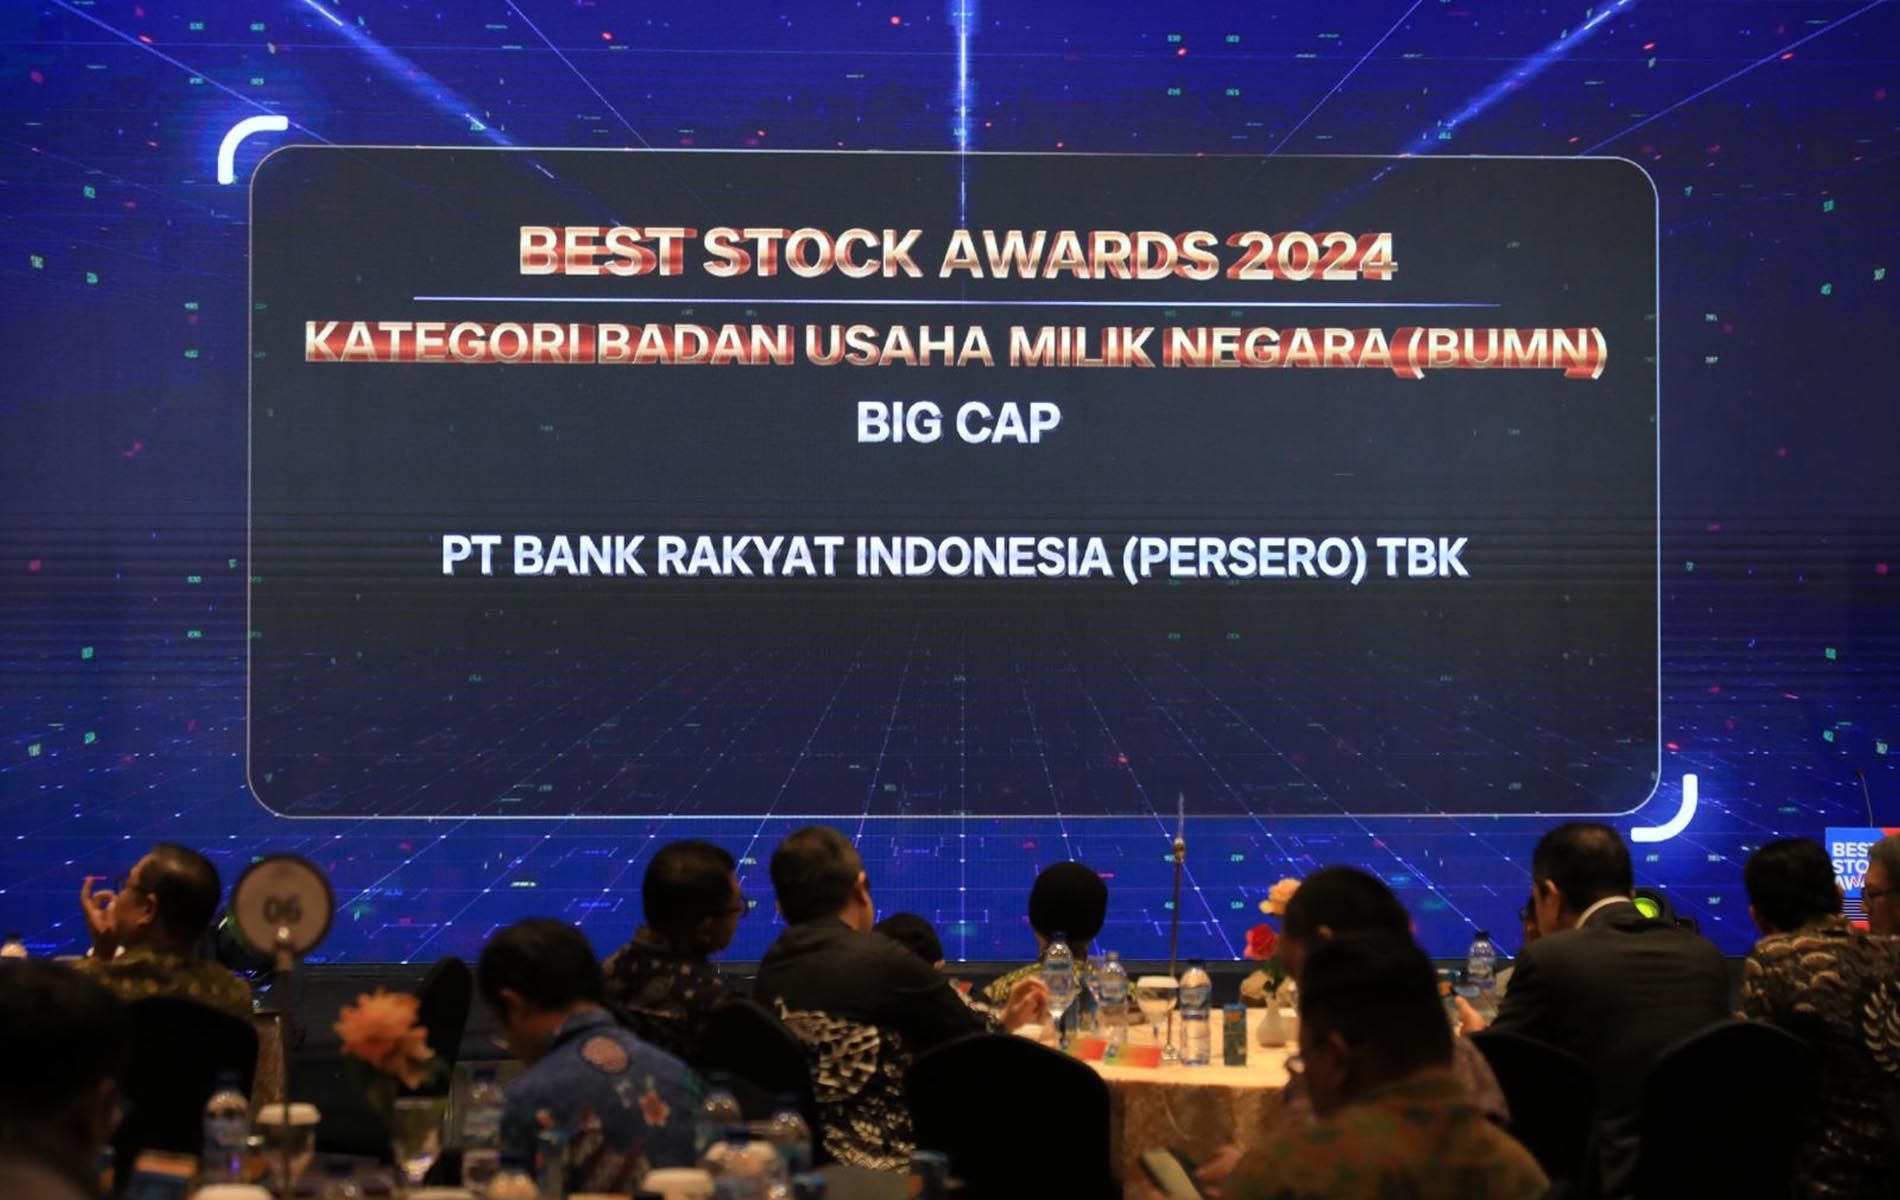 Suasana Acara Best Stock Awards 2024 yang diselenggarakan Investortrust dan Infovesta pada Kamis, 25 Januari 2024